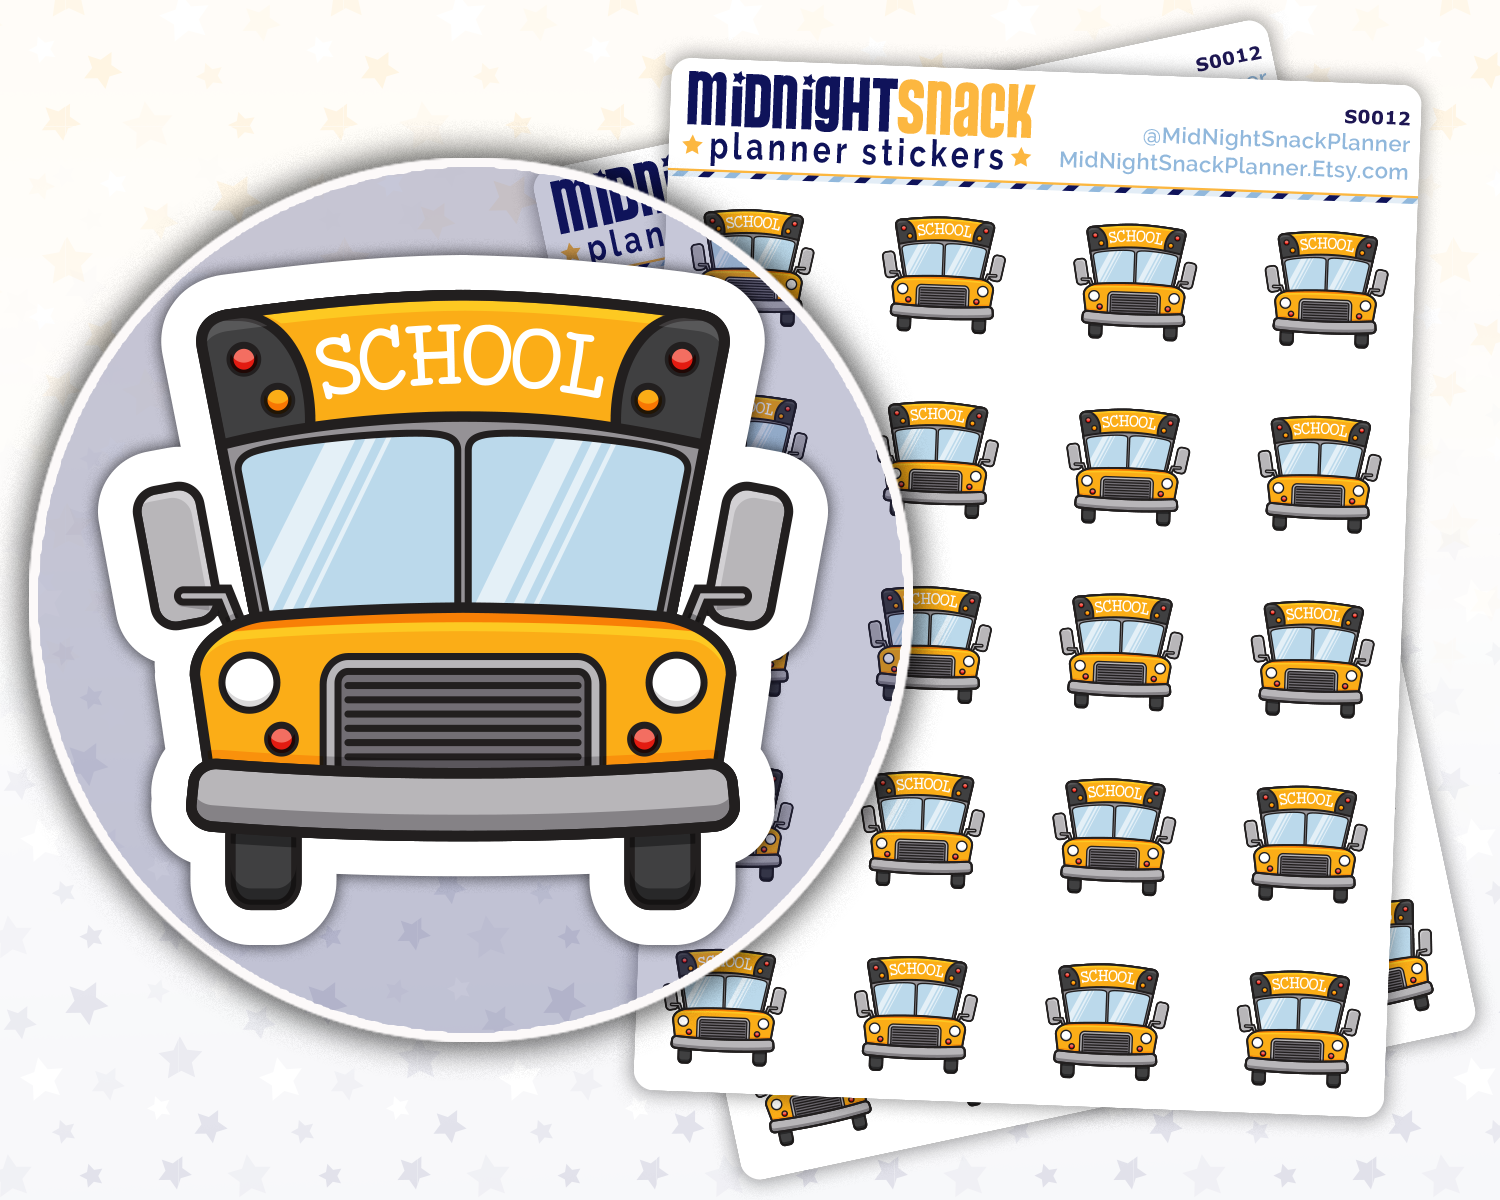 School Bus Planner Stickers from Midnight Snack Planner